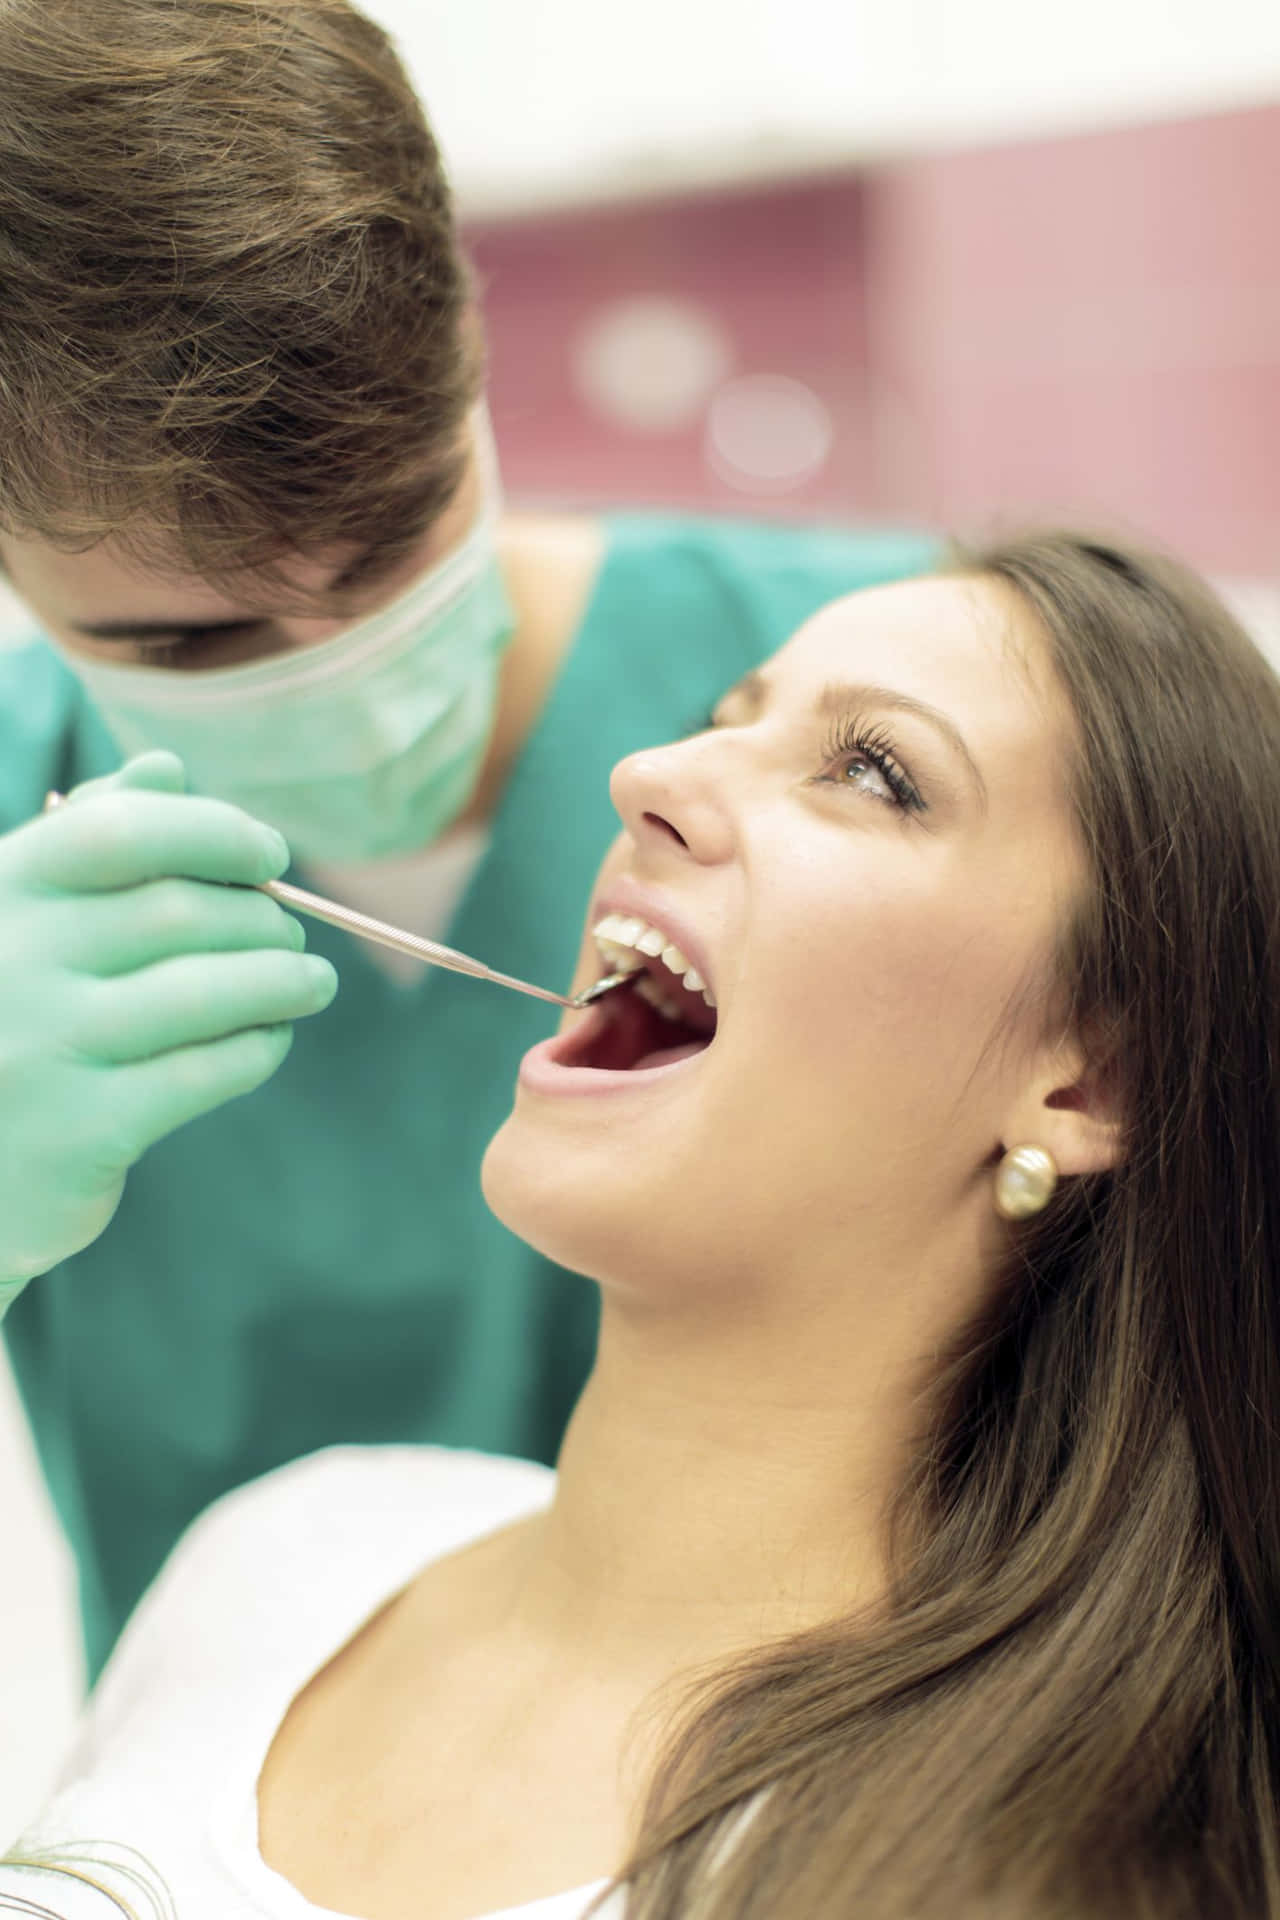 Dentist examining patient with dental tools